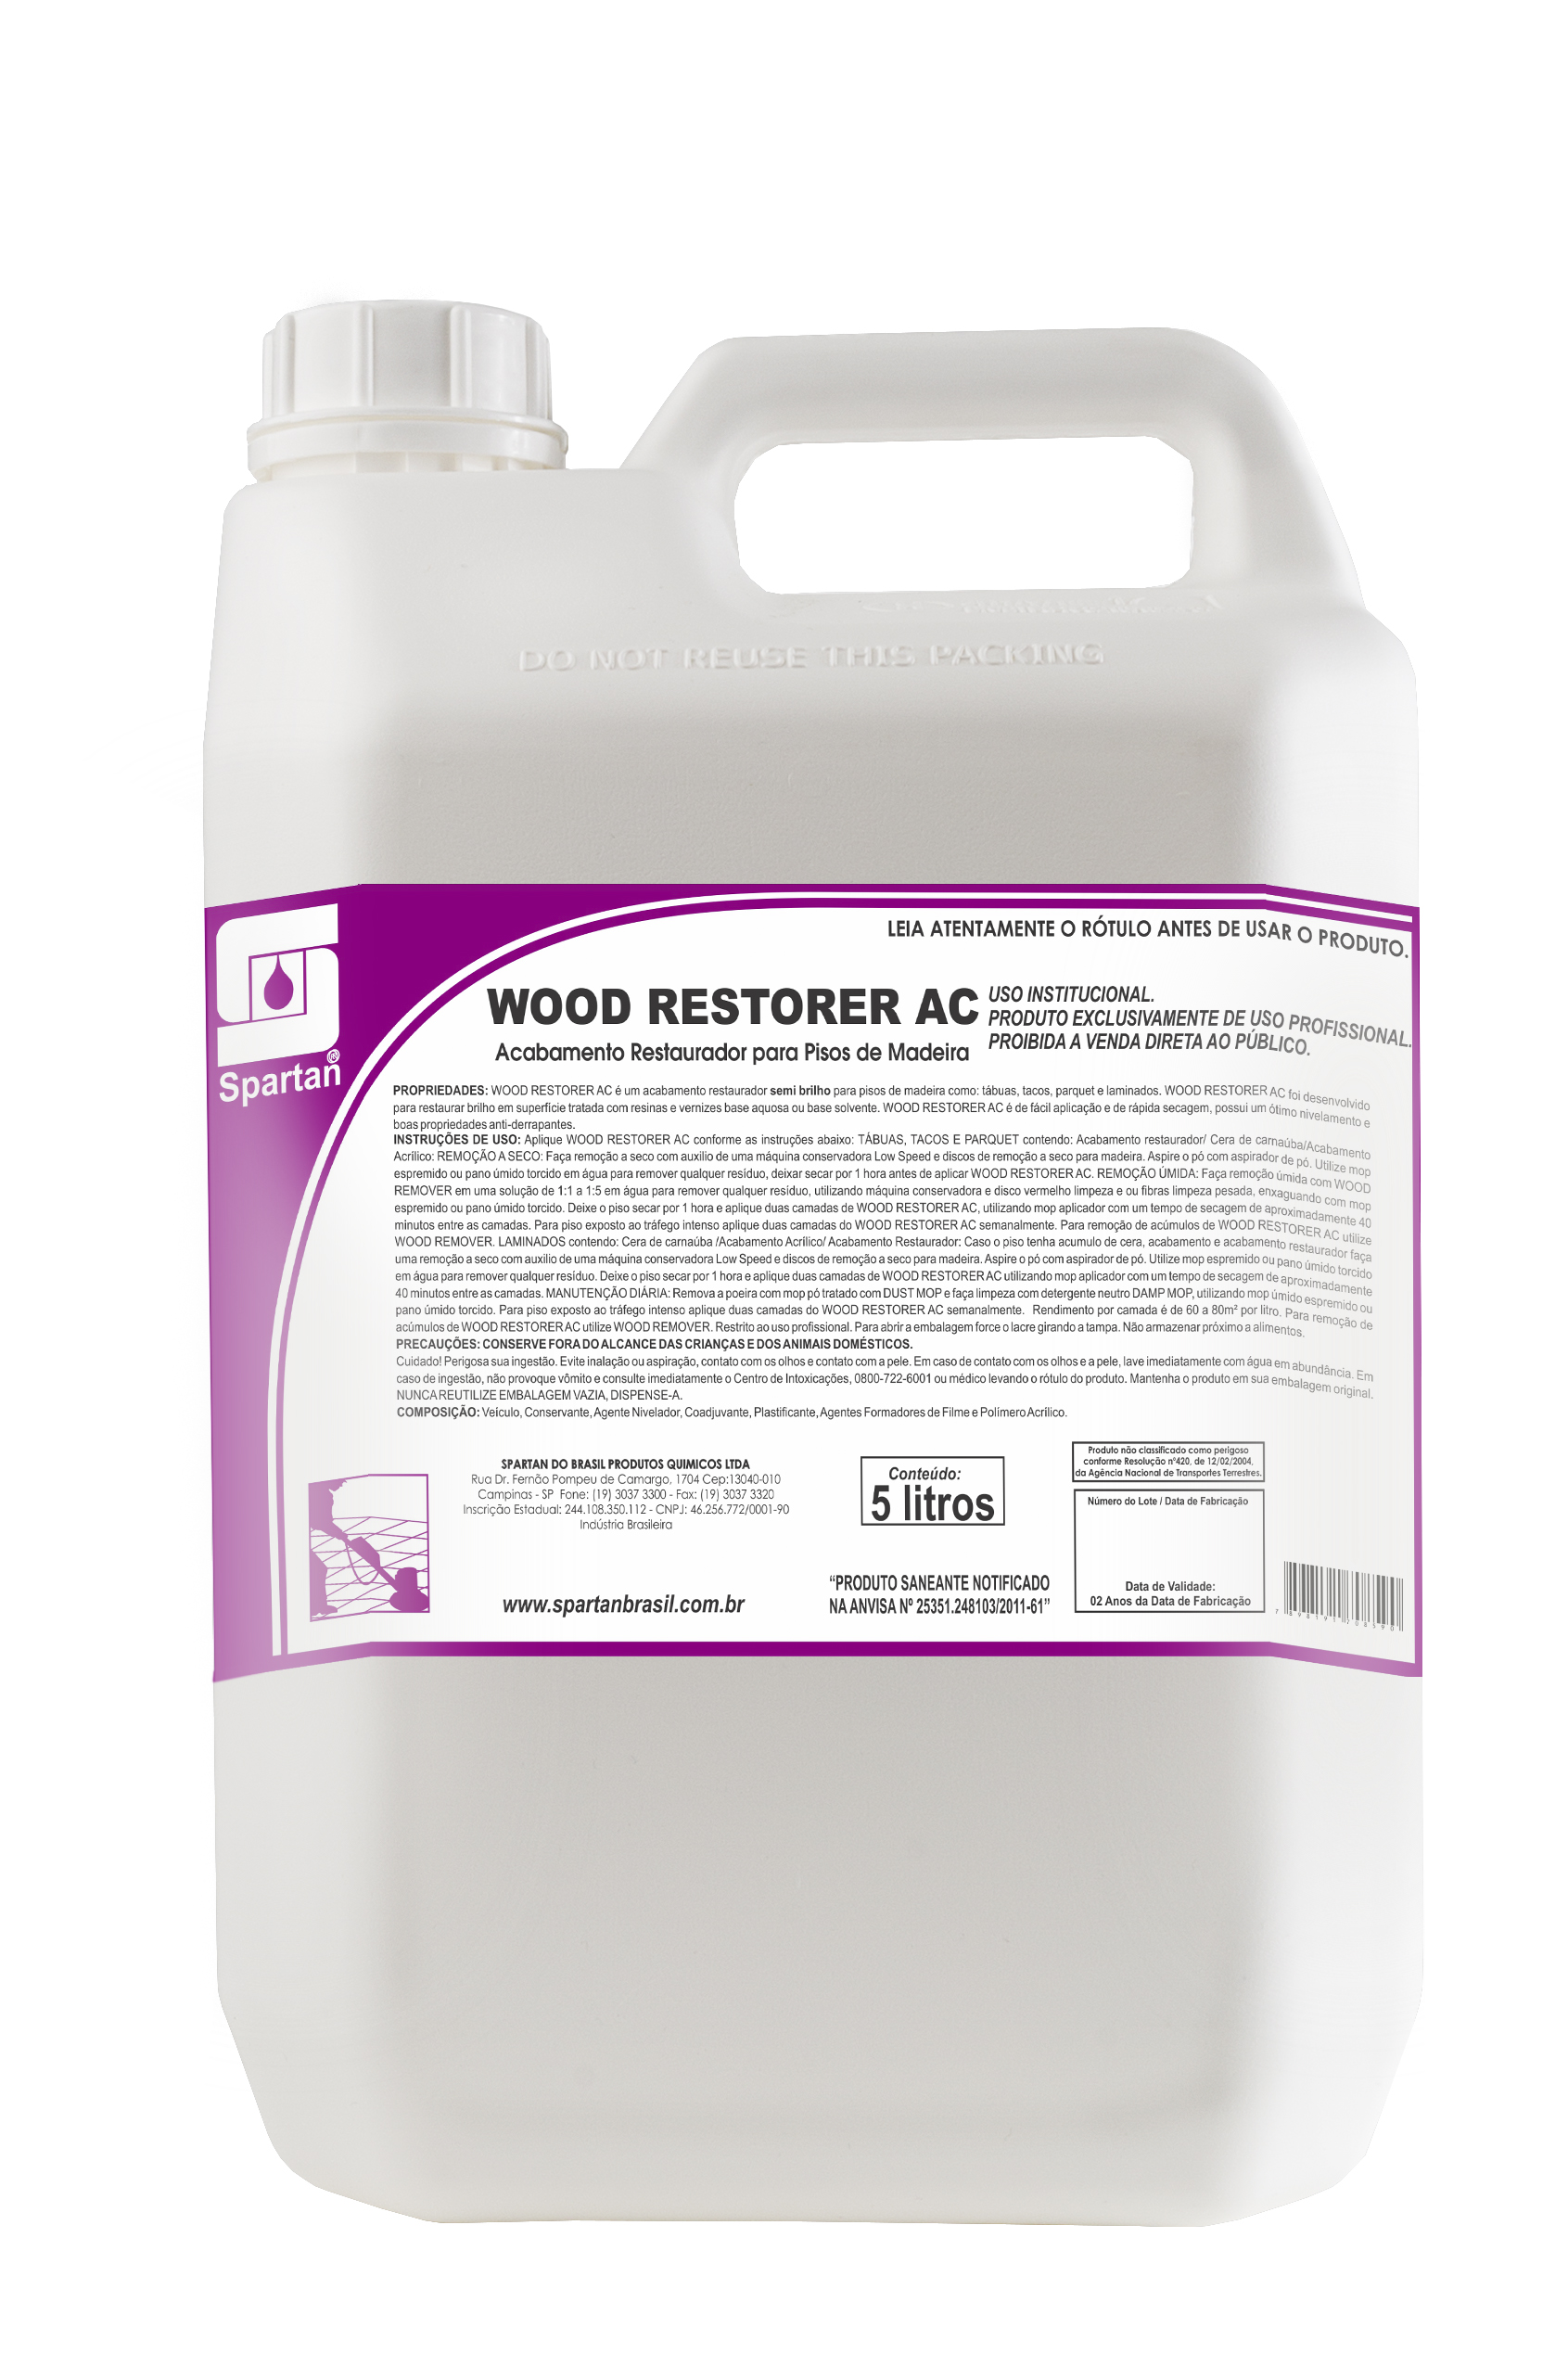 Imagem ilustrativa do produto: Wood Restorer AC